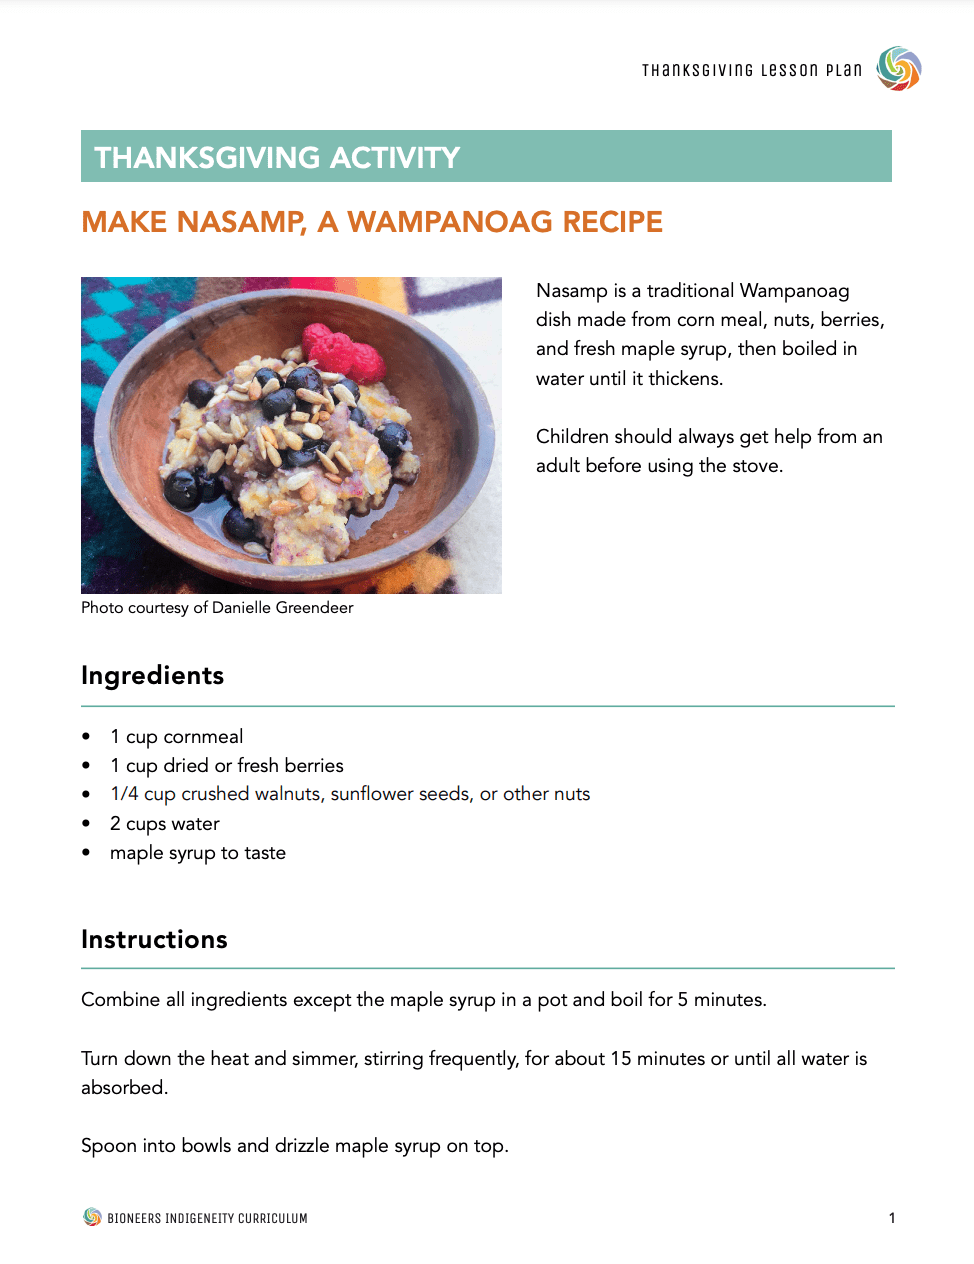 Make Nasamp, a Native American recipe